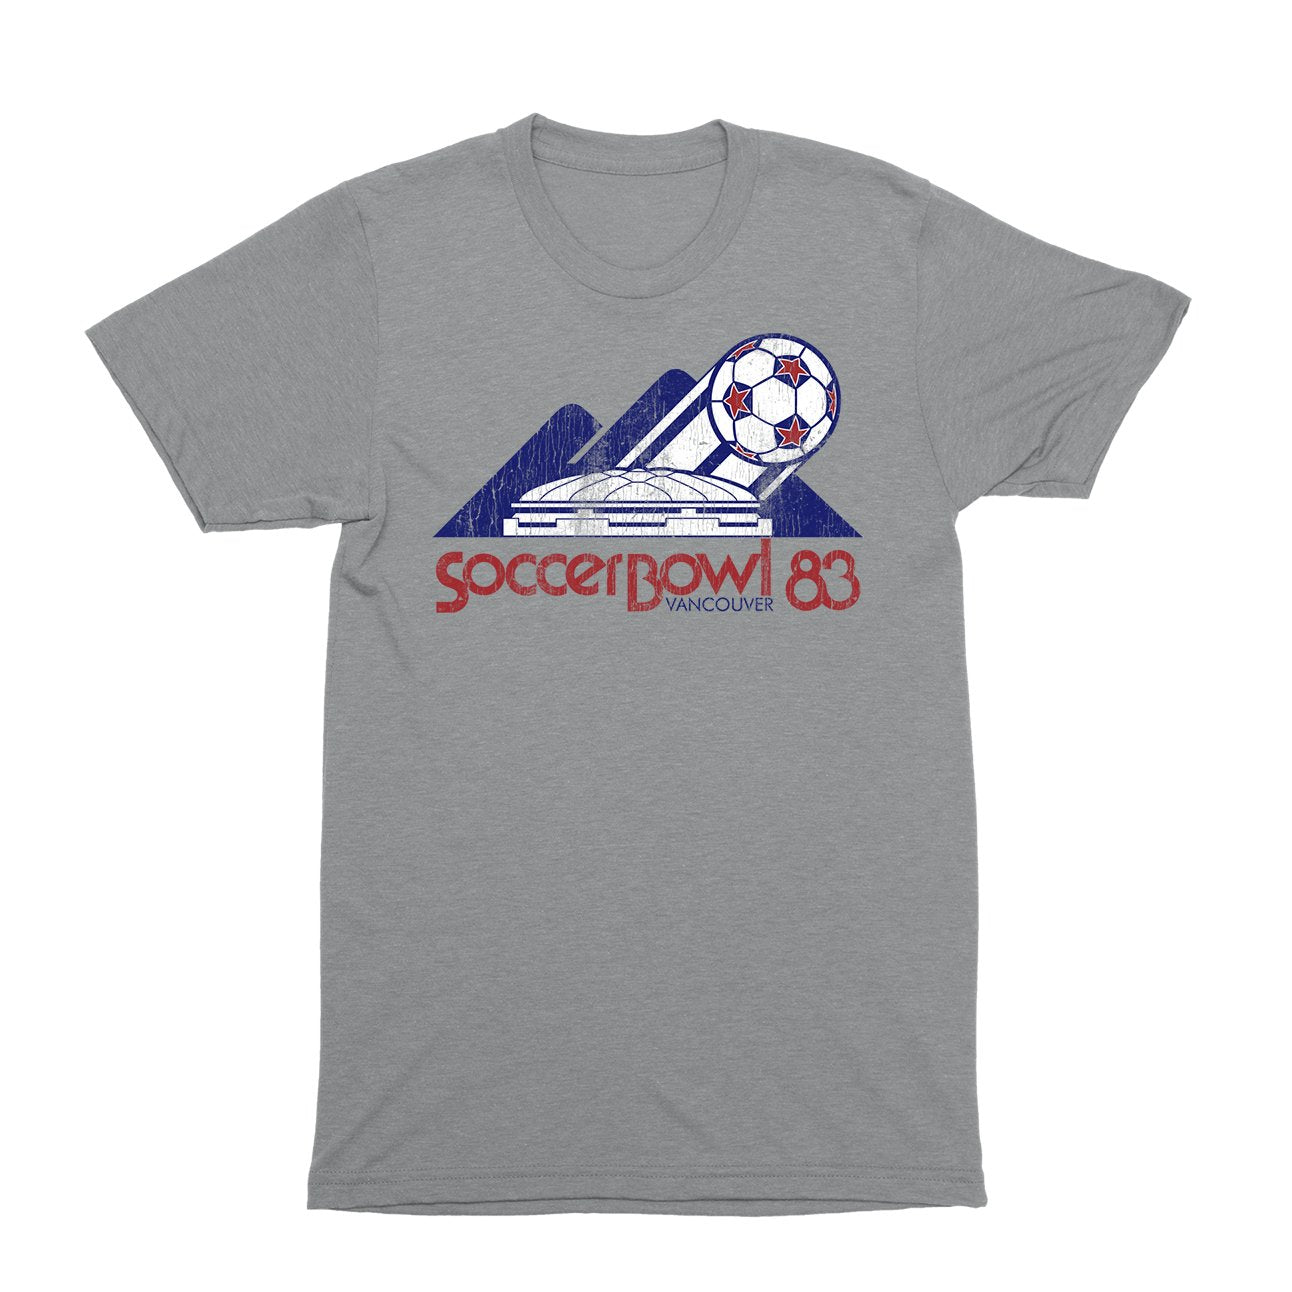 Soccer Bowl 83 T-Shirt - Black Cat MFG -